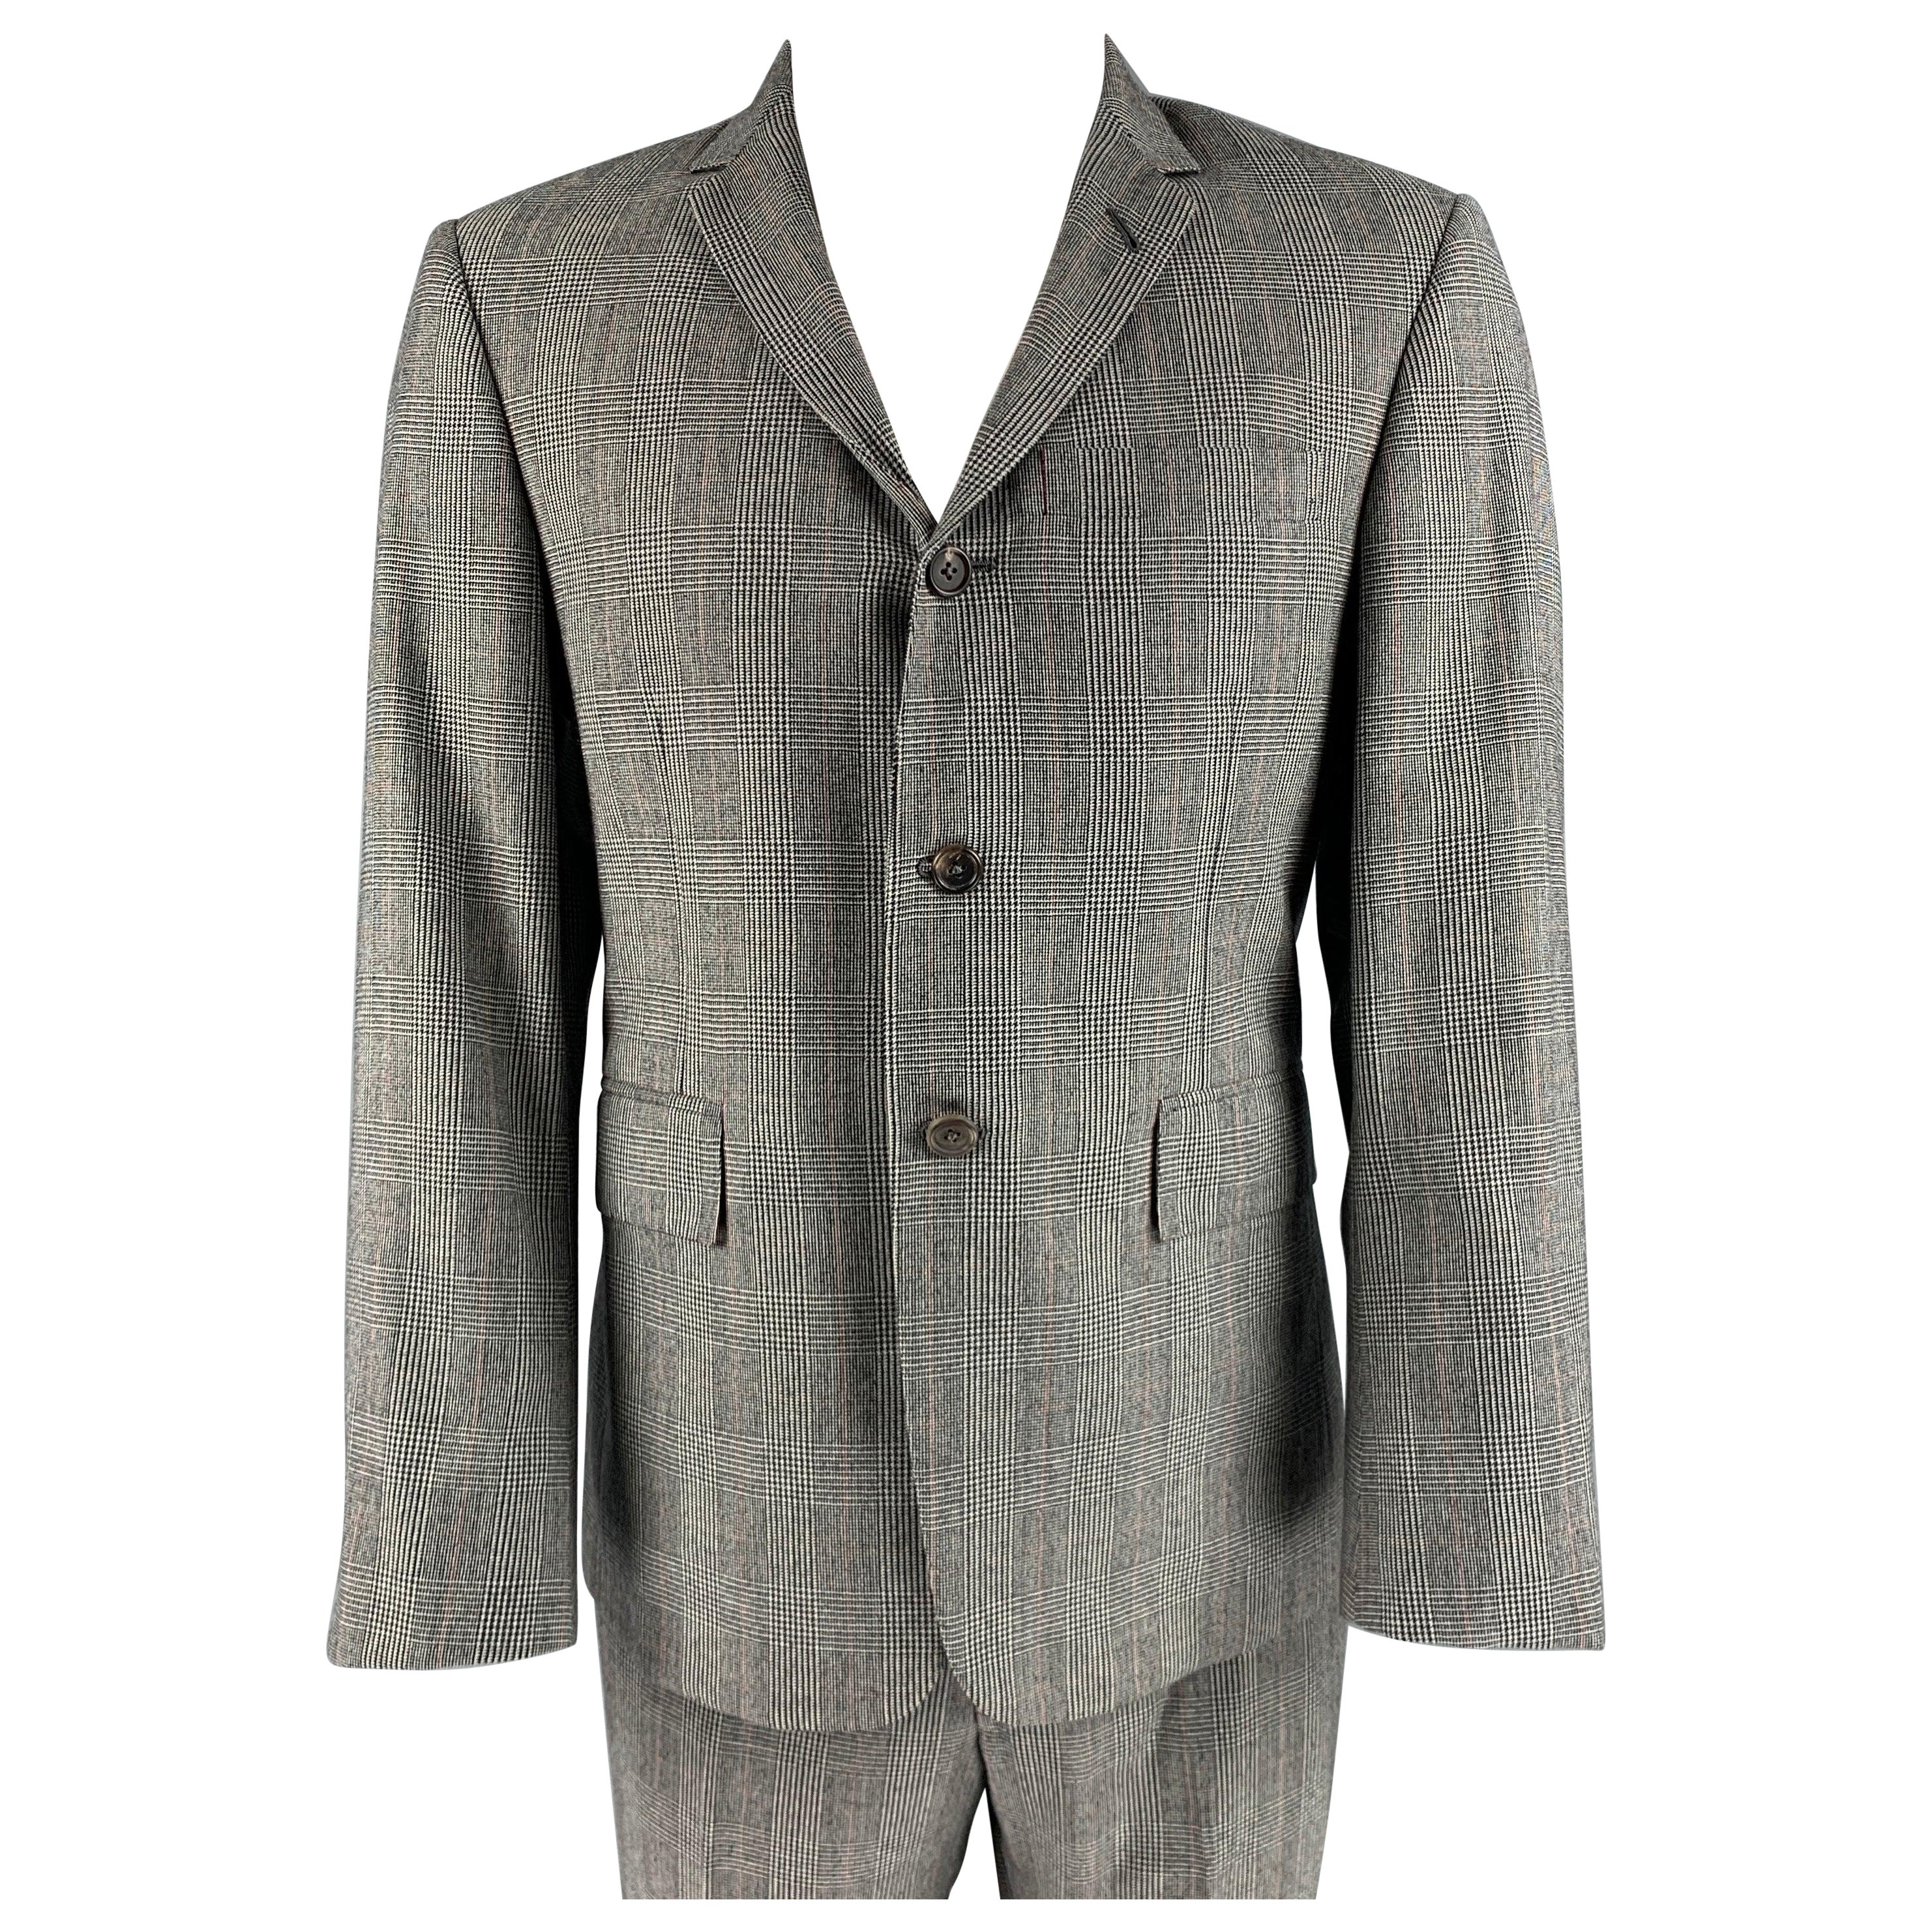 THOM BROWNE Size 40 Black White Glenplaid Wool Notch Lapel Suit For Sale